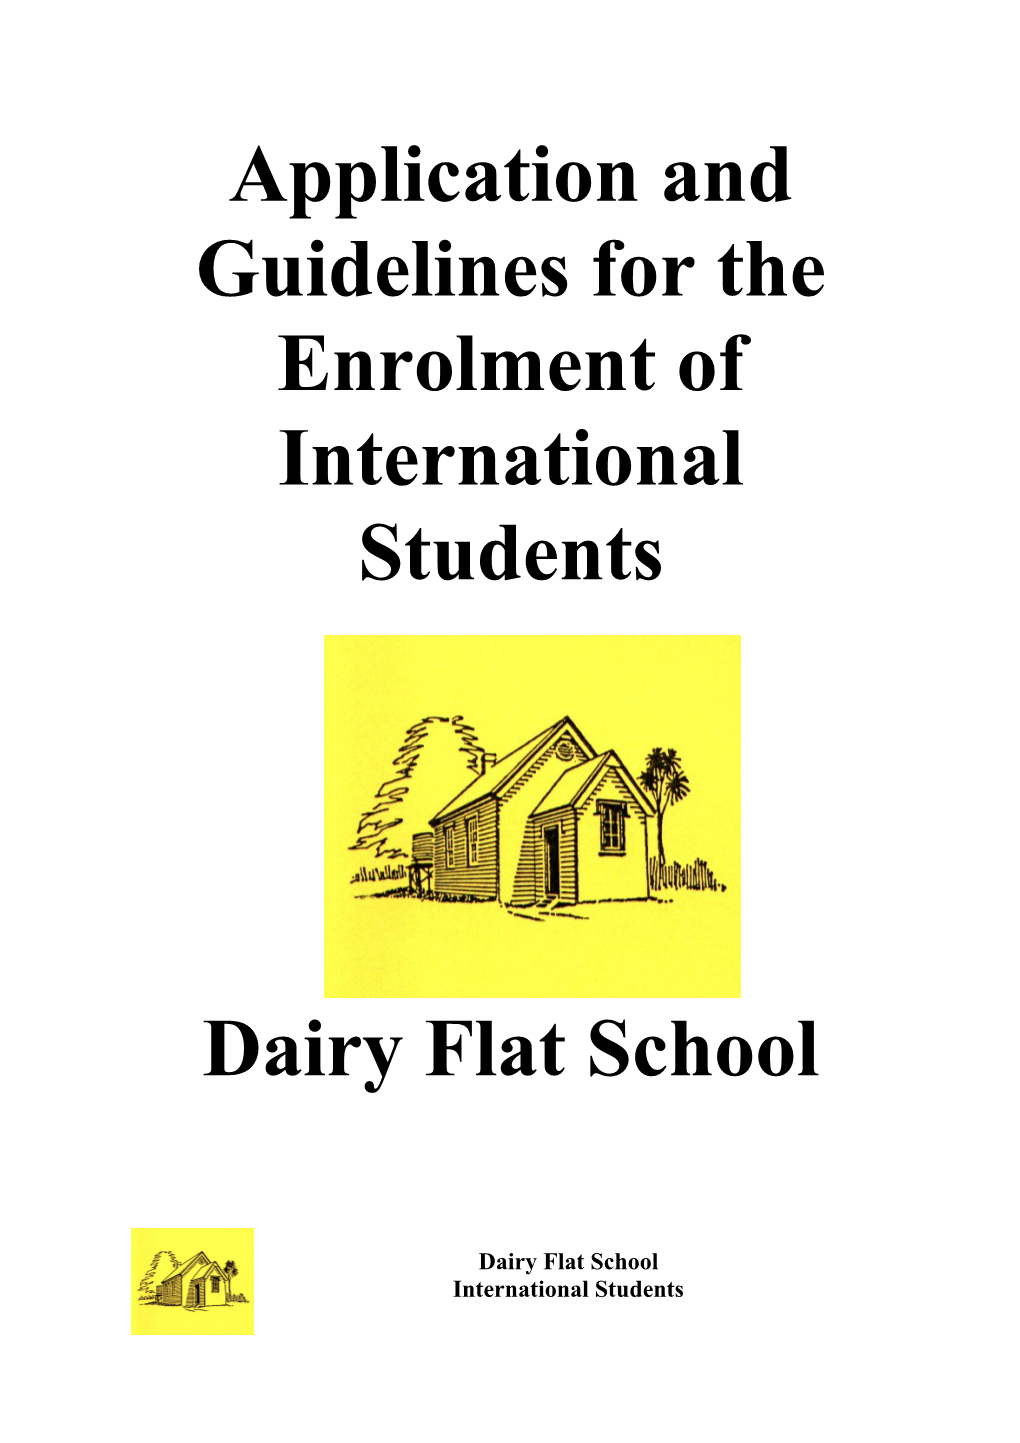 Dairy Flat School